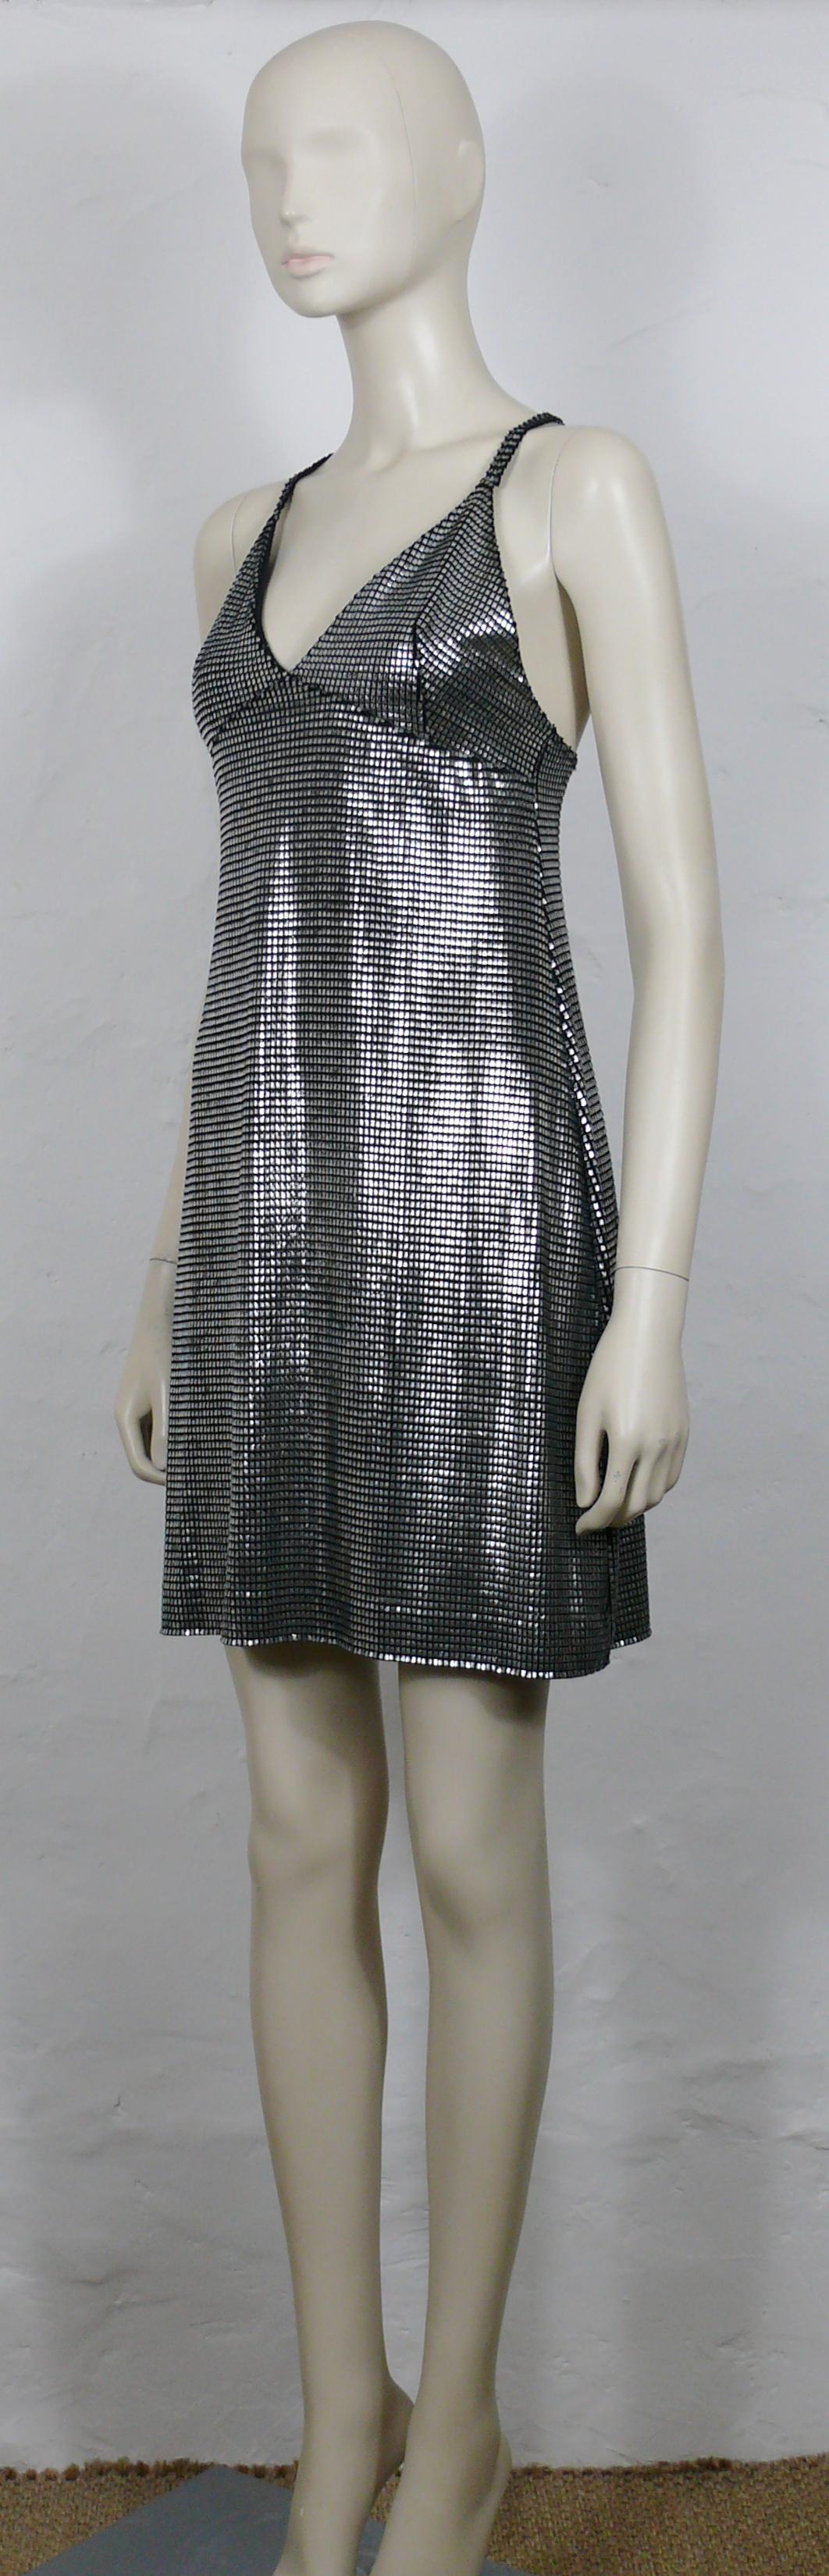 PACO RABANNE Silver Foil Grid Dress For Sale 2